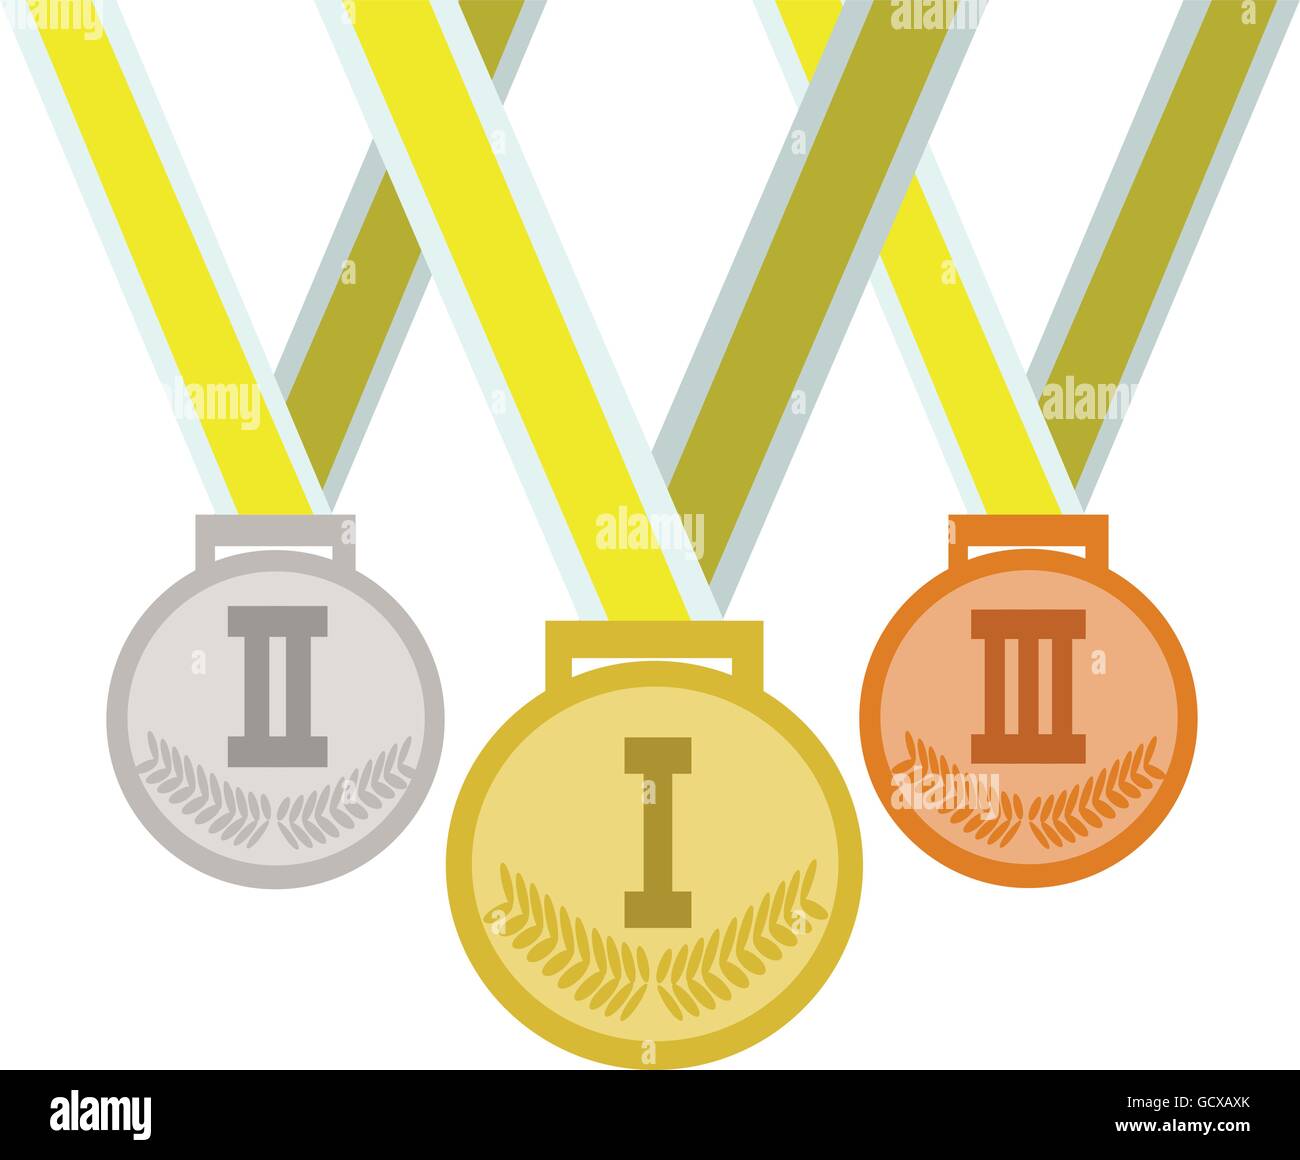 Brasil, rio 2016, colored medals. Digital vector image Stock Vector